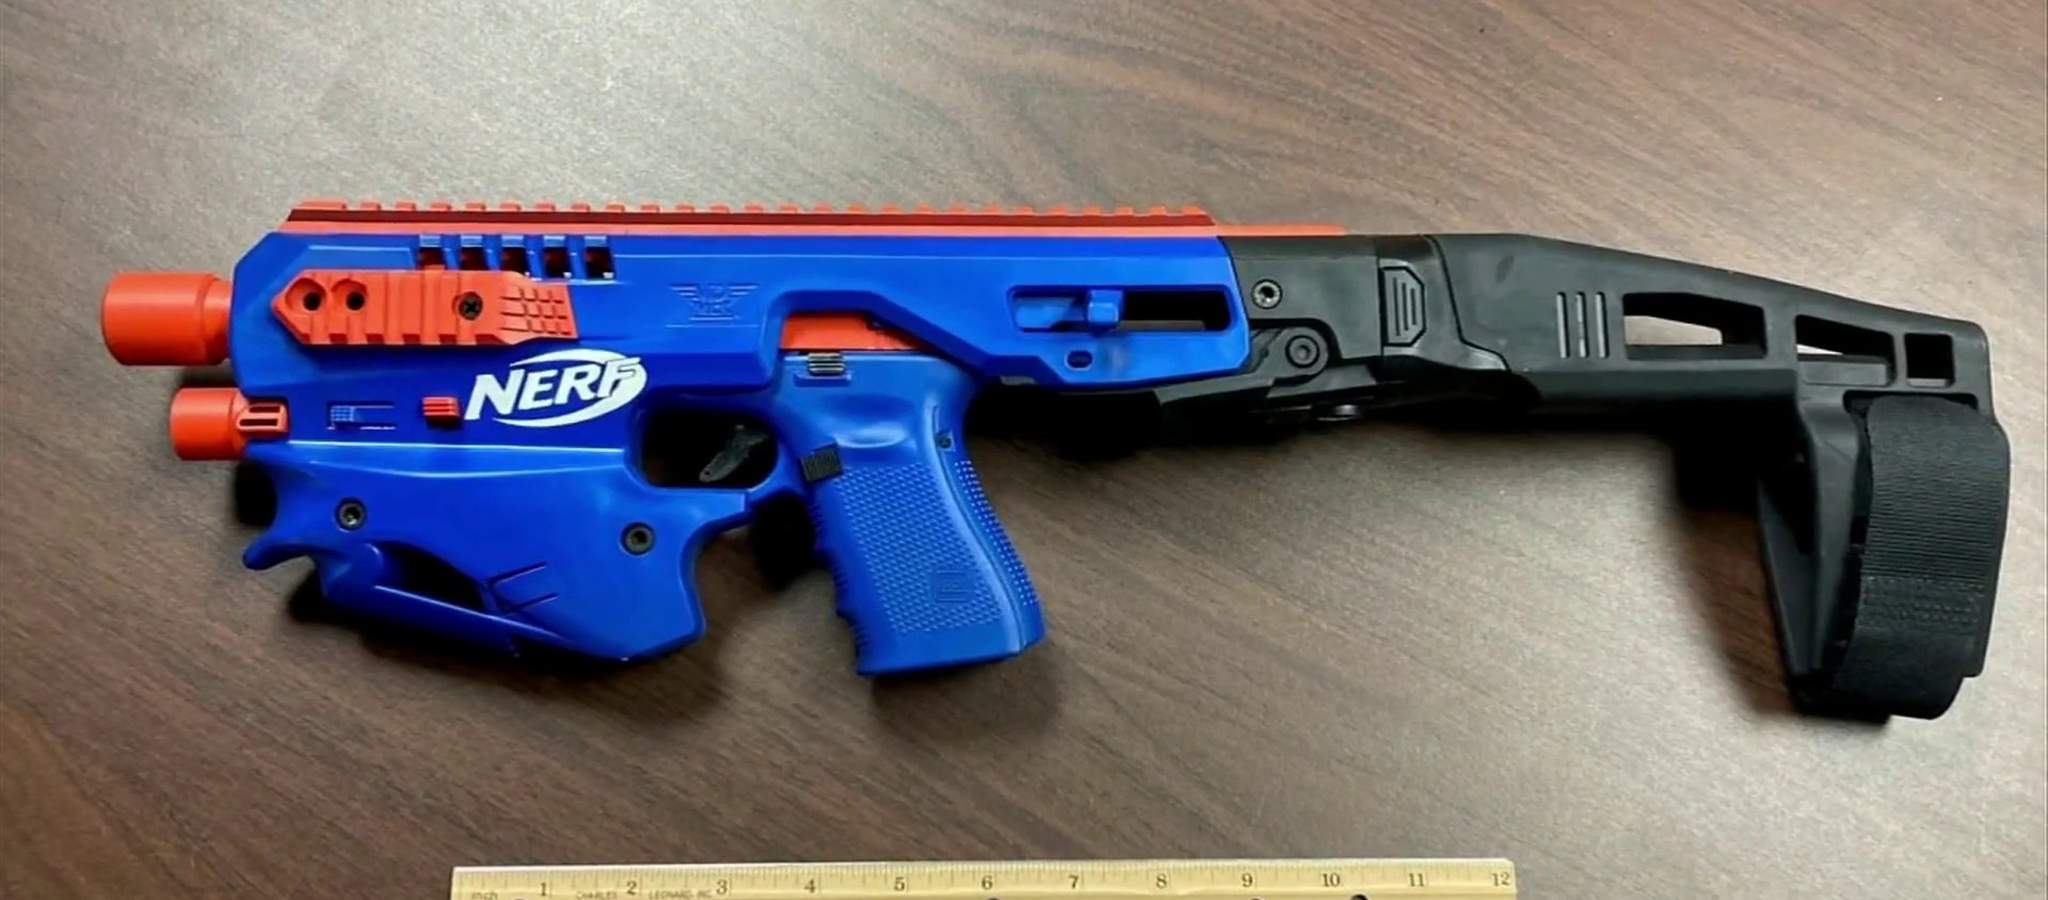 Real gun disguised as Nerf toy seized in North Carolina drug raid